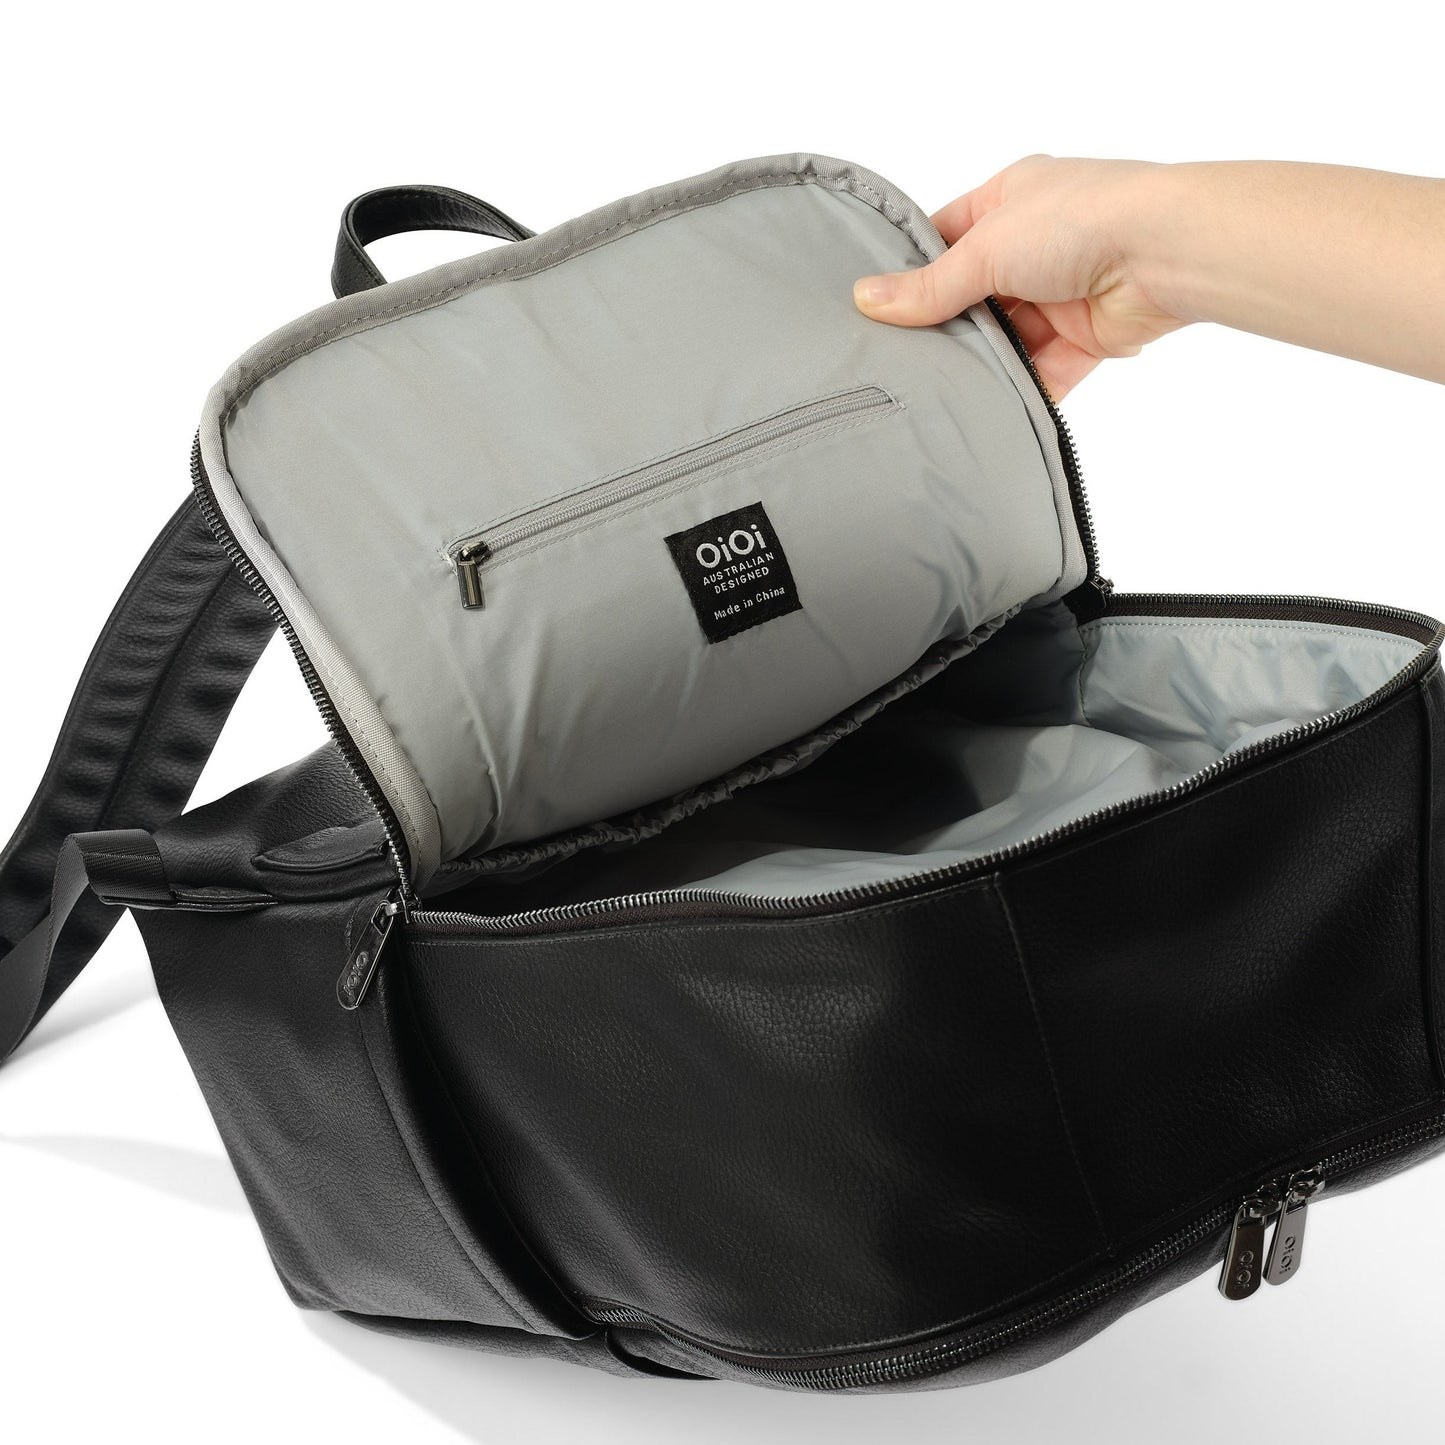 Multitasker Diaper Backpack - Black Vegan Leather